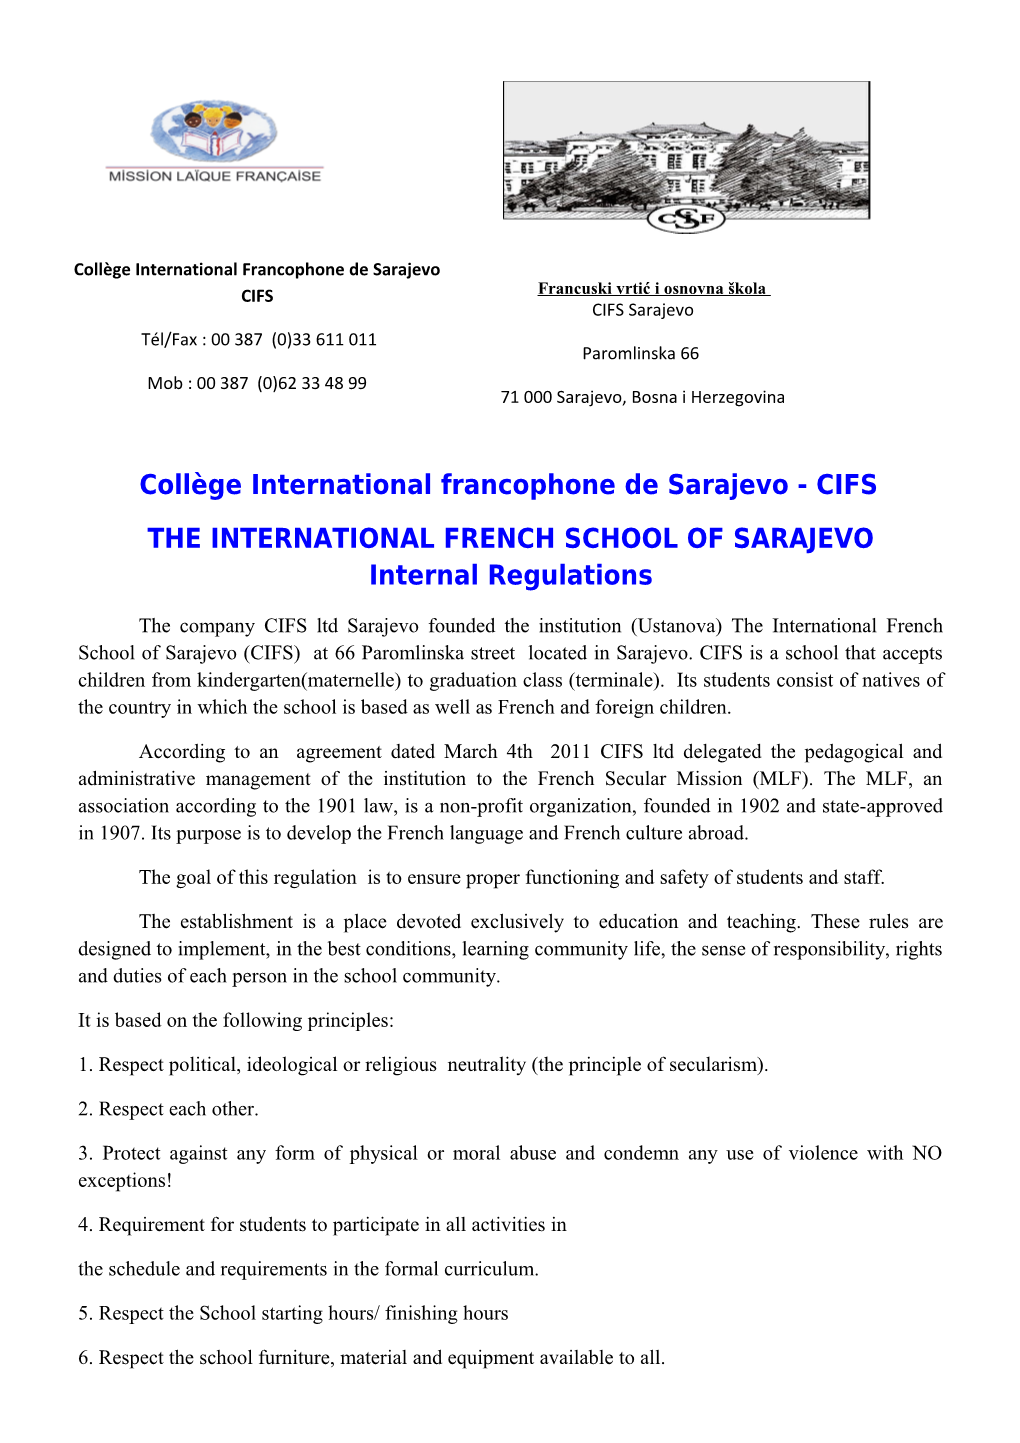 The International French School of Sarajevo